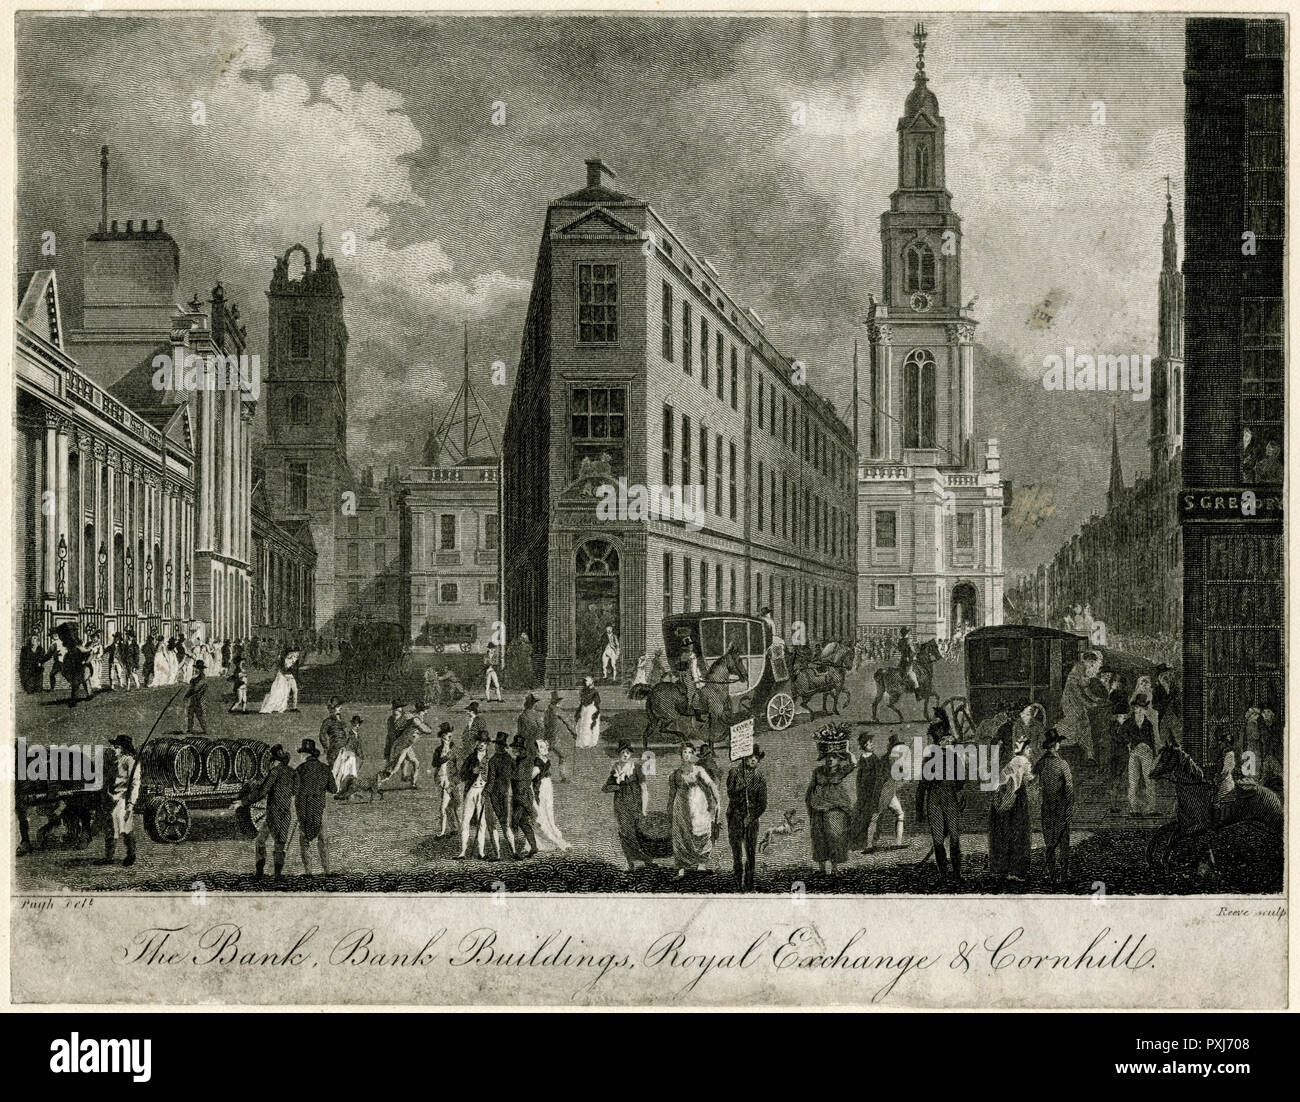 Edifici bancari, Royal Exchange & Cornhill 1805 Foto Stock